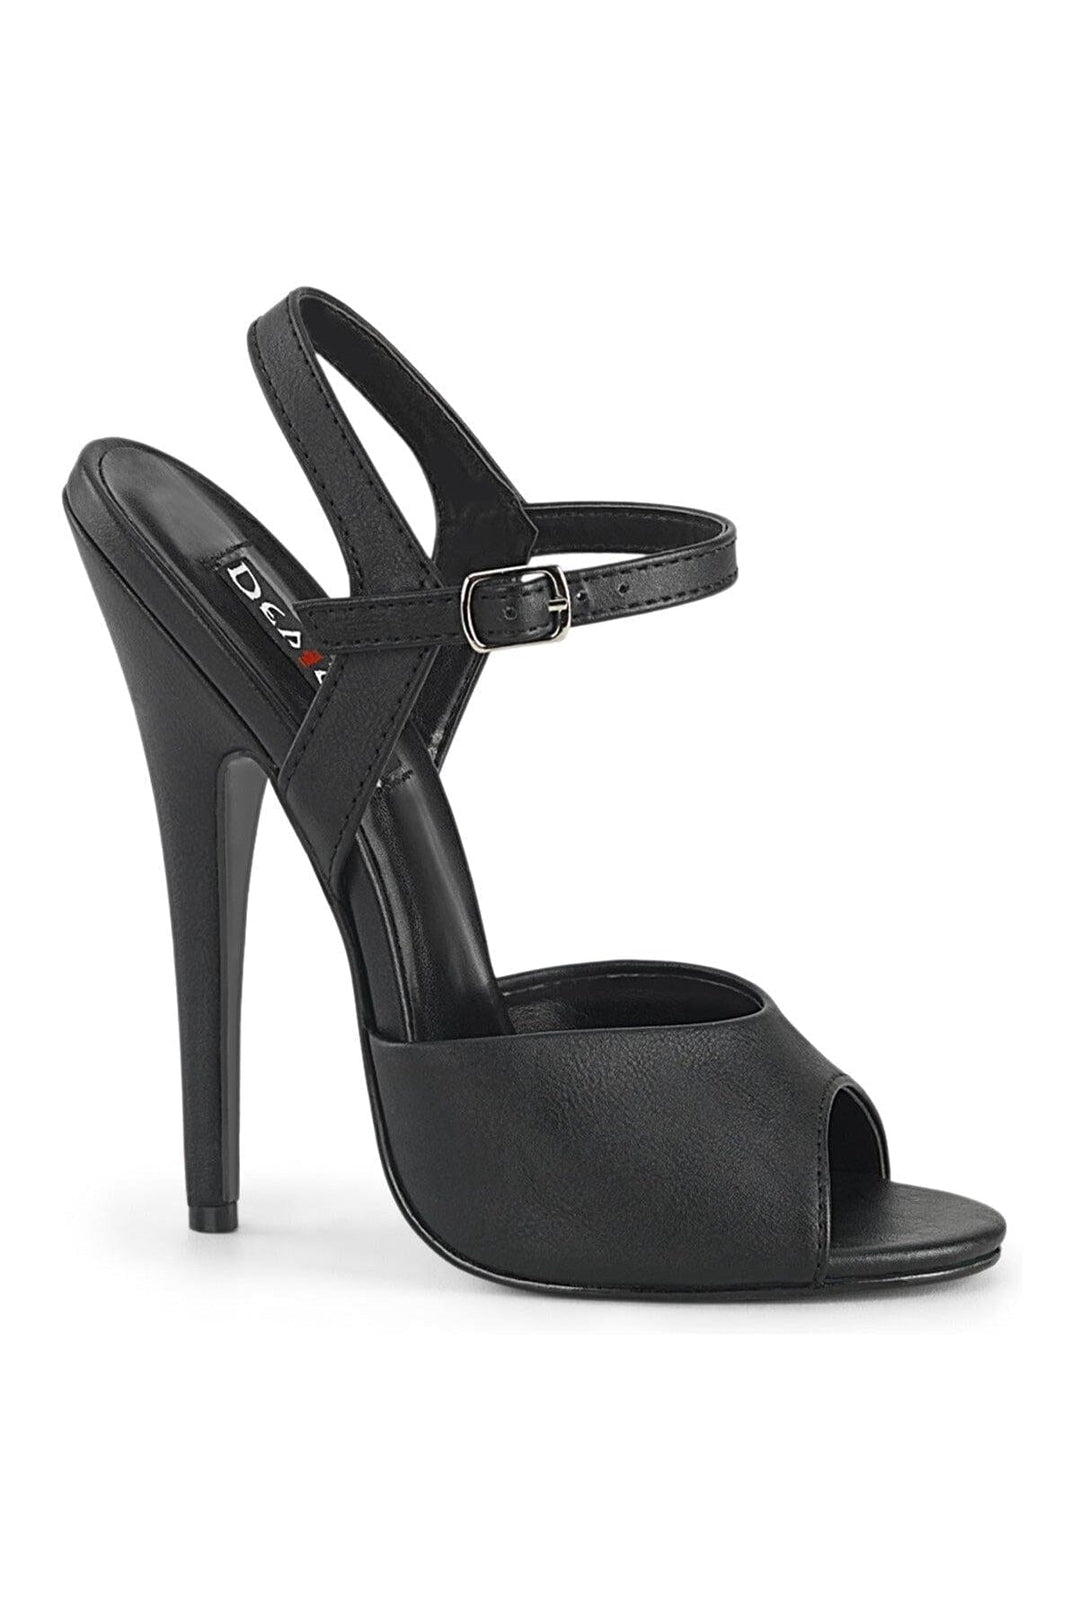 DOMINA-109 Black Faux Leather Sandal-Sandals- Stripper Shoes at SEXYSHOES.COM